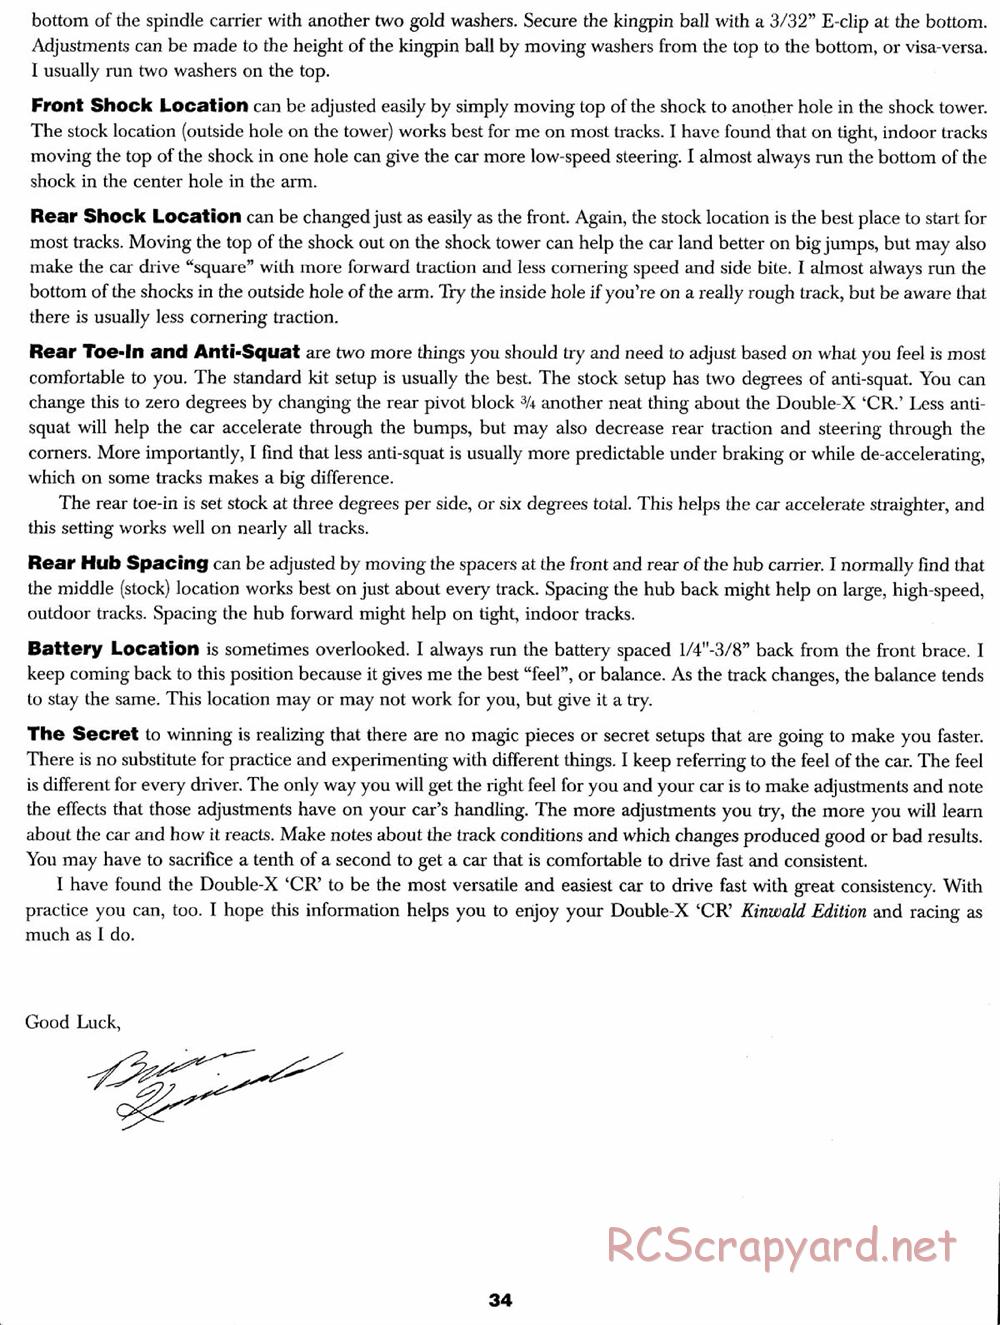 Team Losi - XX CR Kinwald Edition - Manual - Page 37